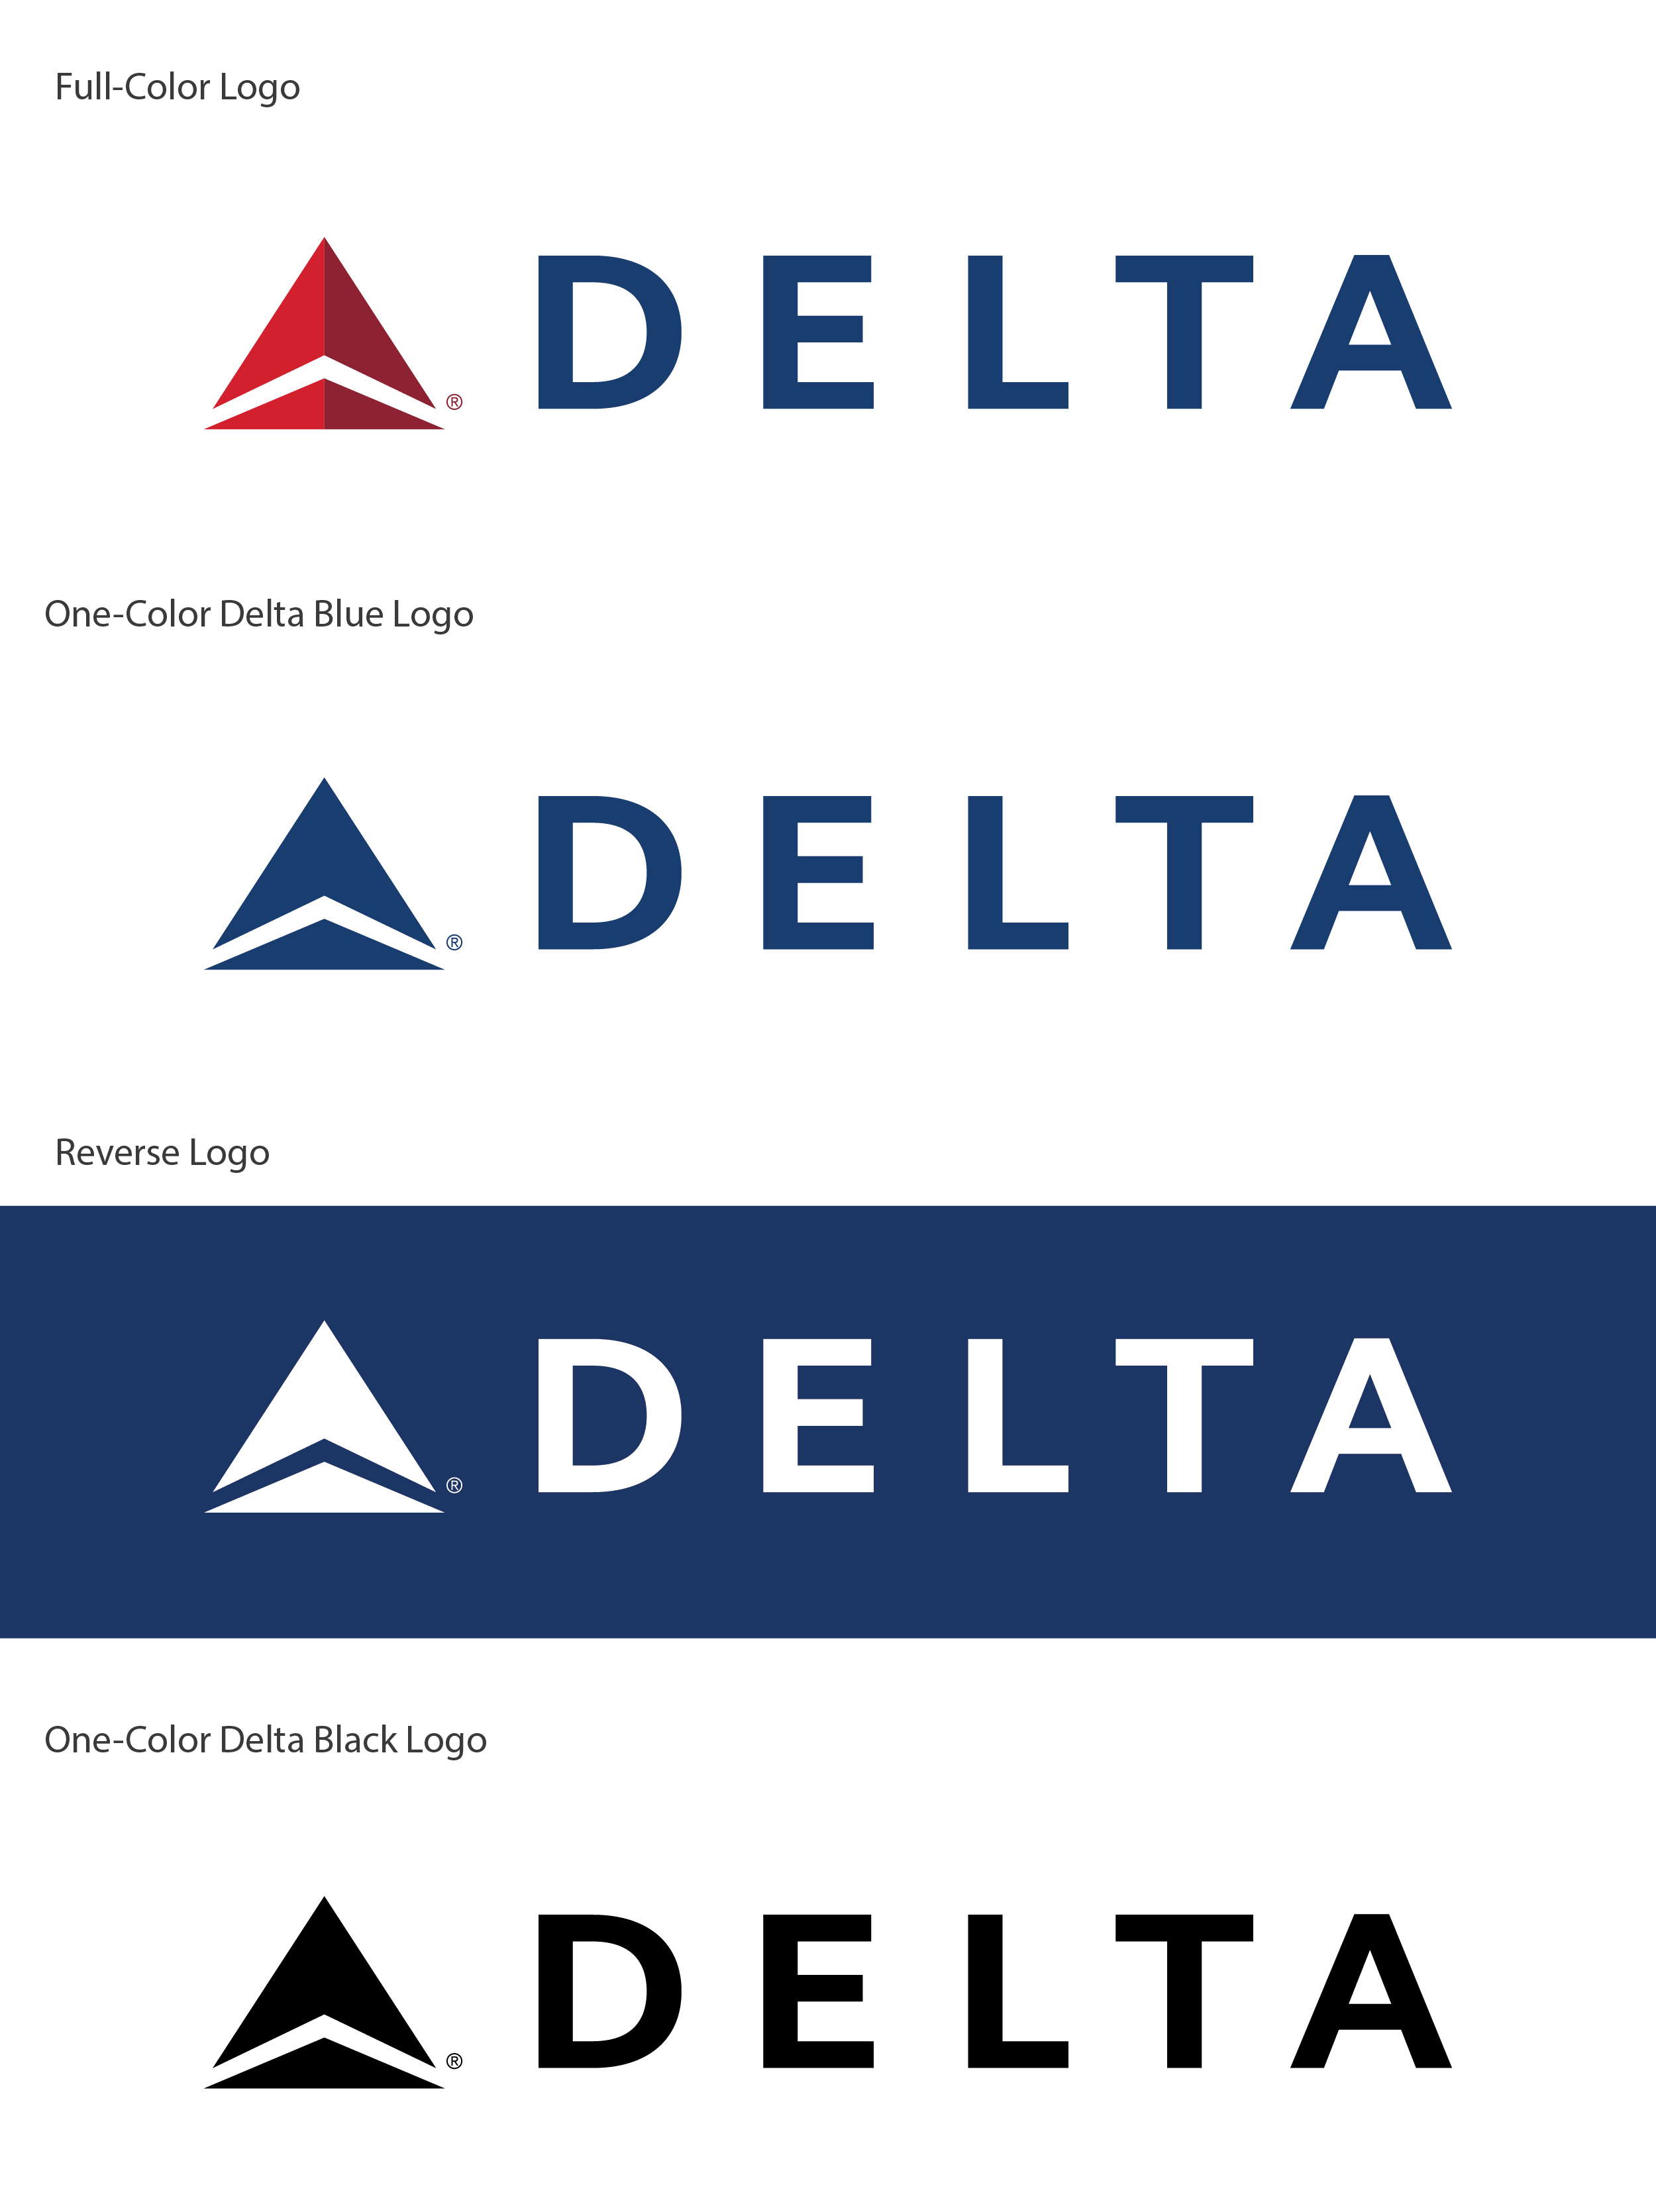 Delta Airlines Logo PNG - 177283